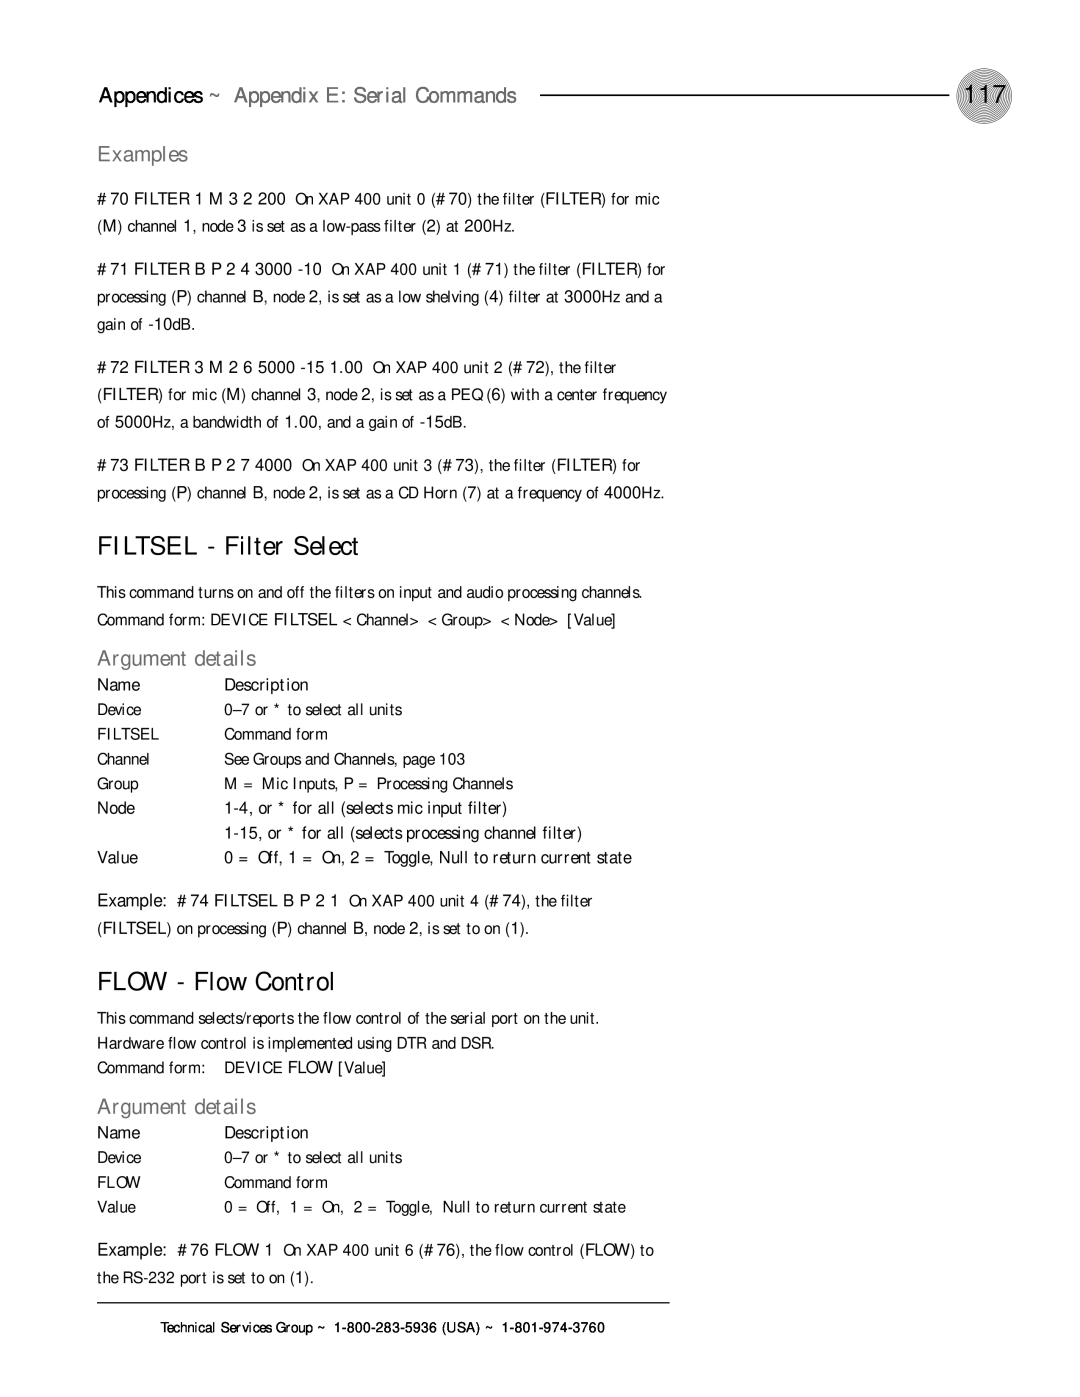 ClearOne comm XAP 400 FILTSEL - Filter Select, FLOW - Flow Control, Examples, Appendices ~ Appendix E: Serial Commands 